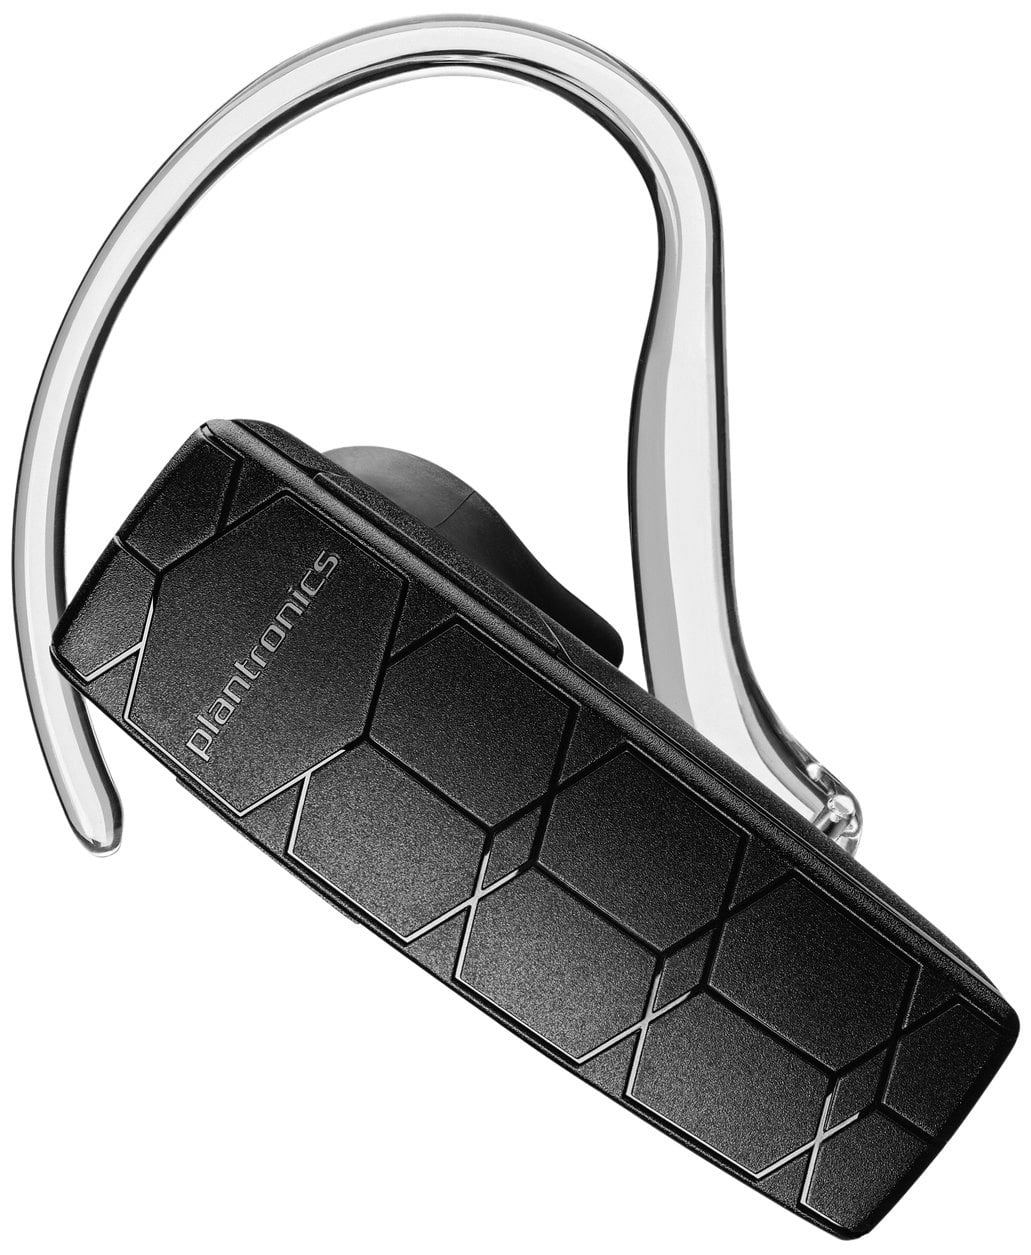 Plantronics Explorer 50 Bluetooth Headset - Retail Packaging Black - Walmart.com